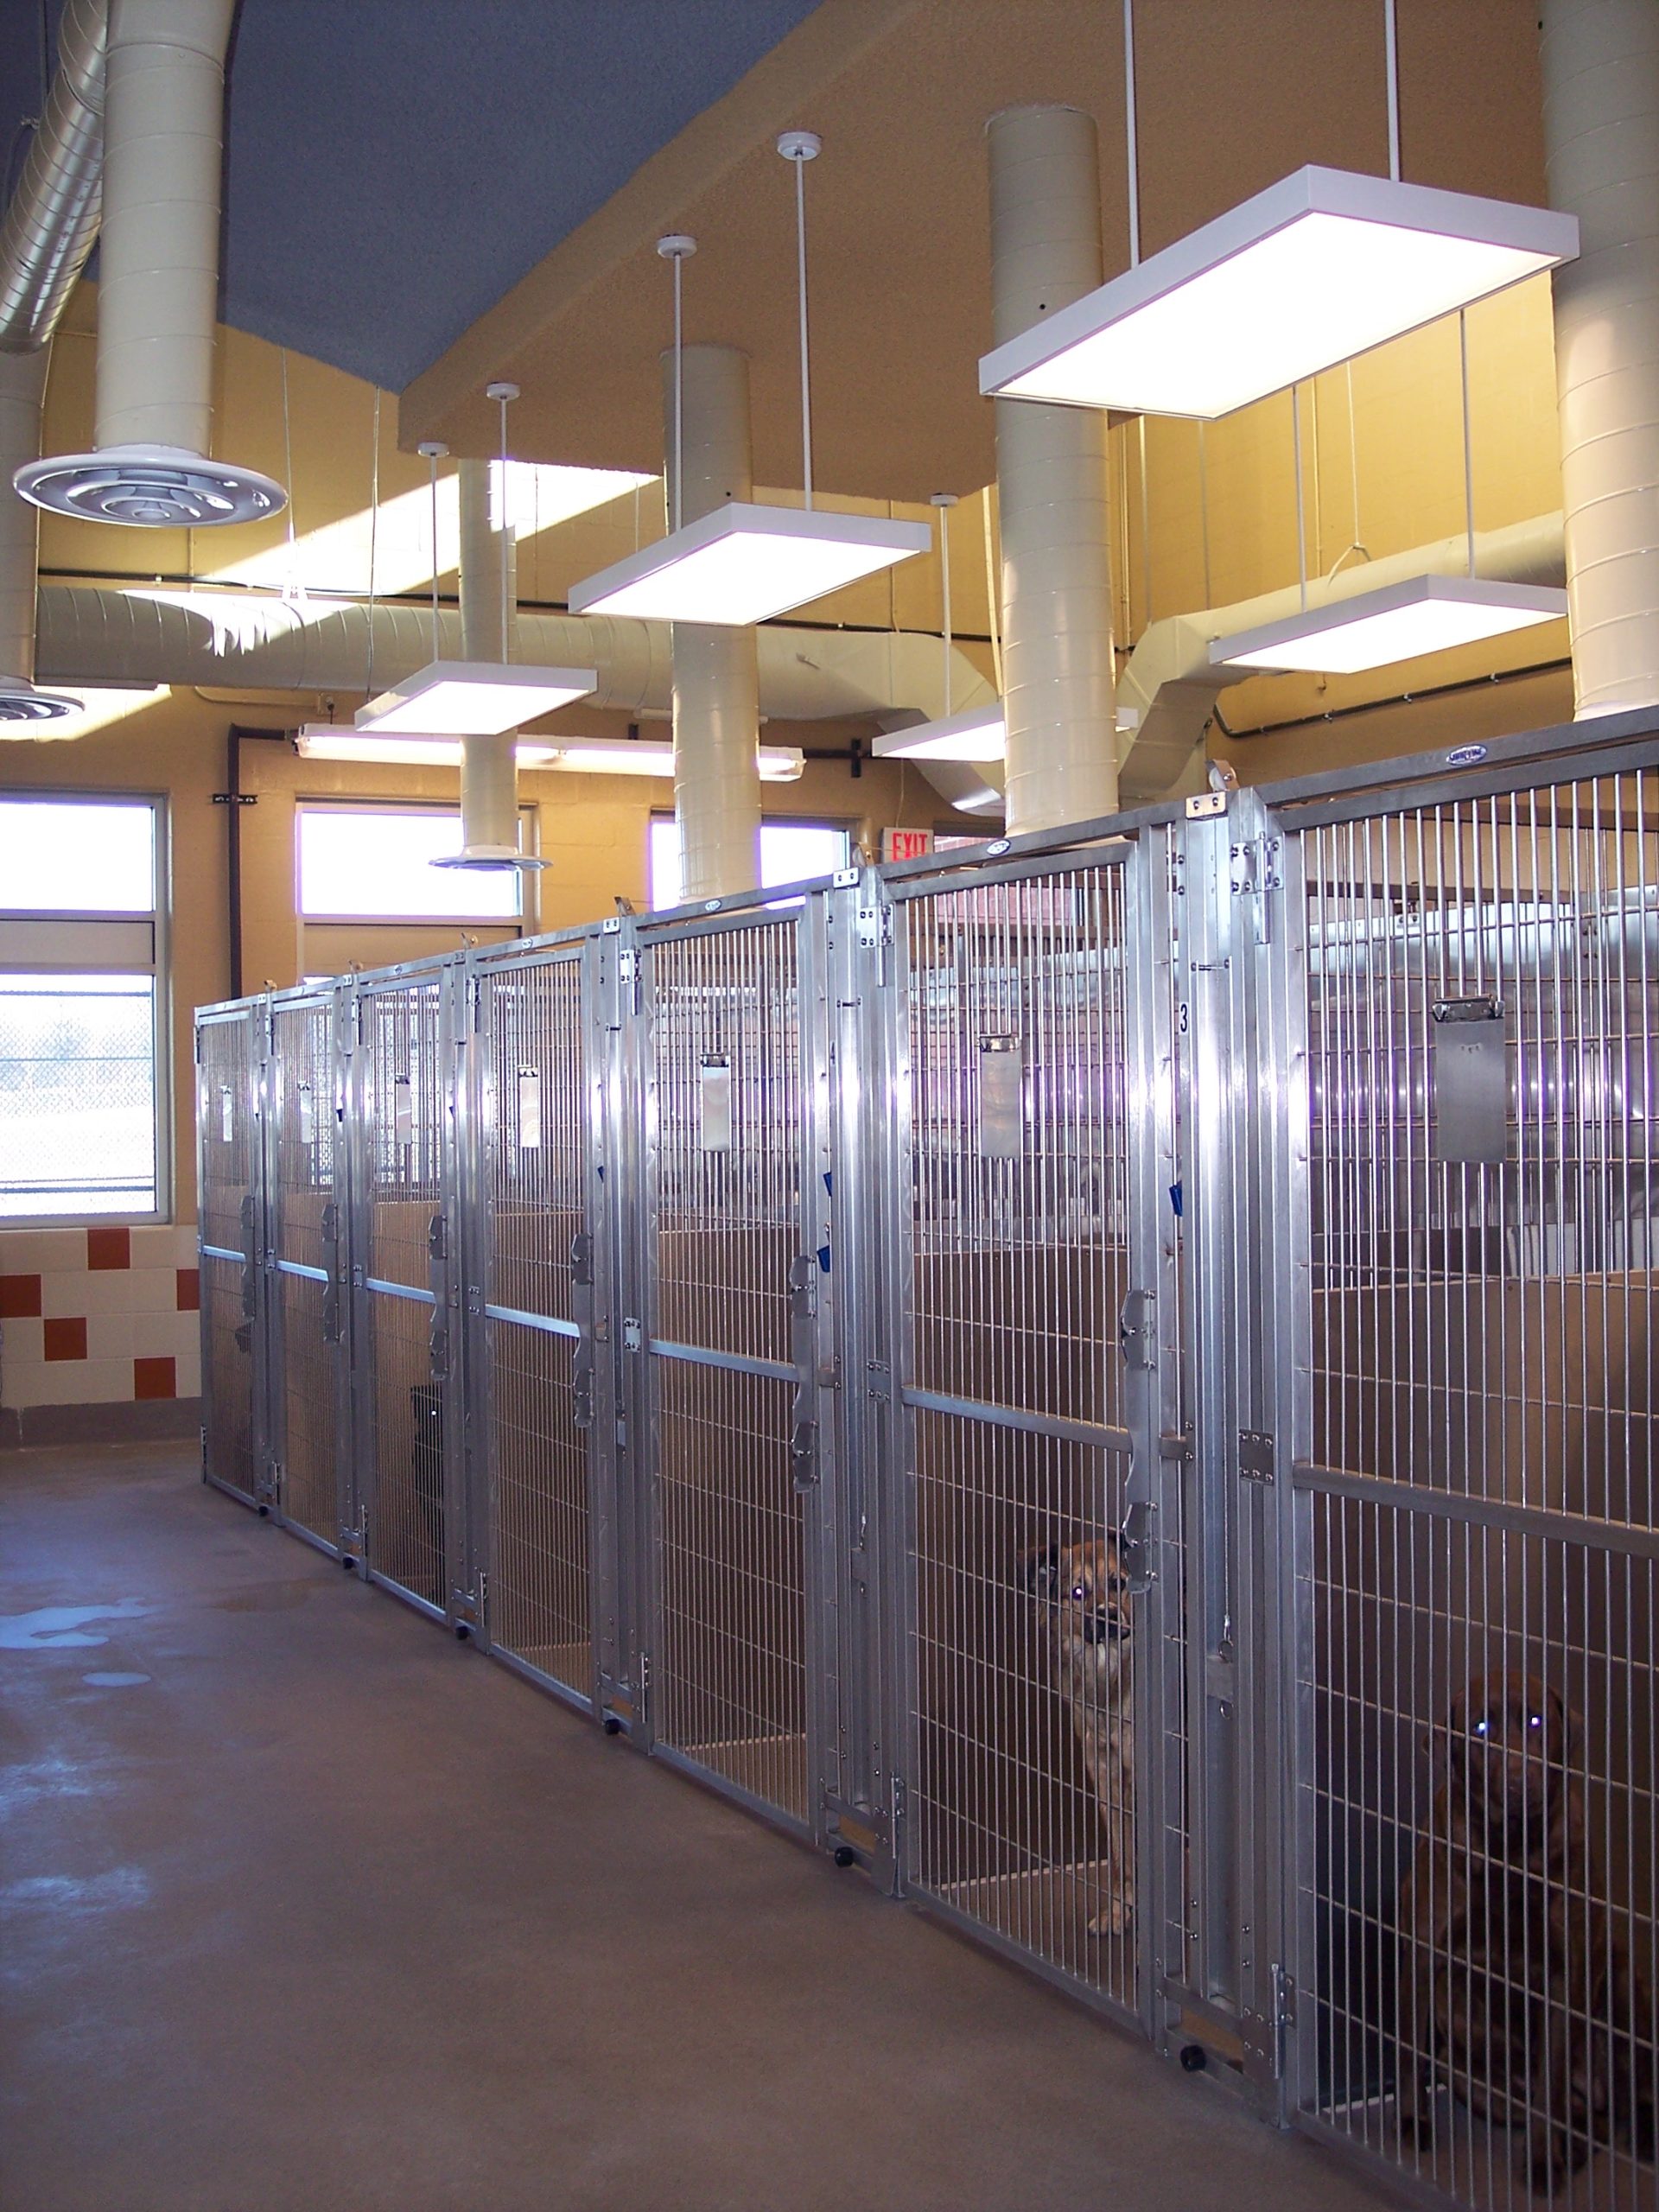 0446-1 Frederick County Animal Shelter Dog Kennels